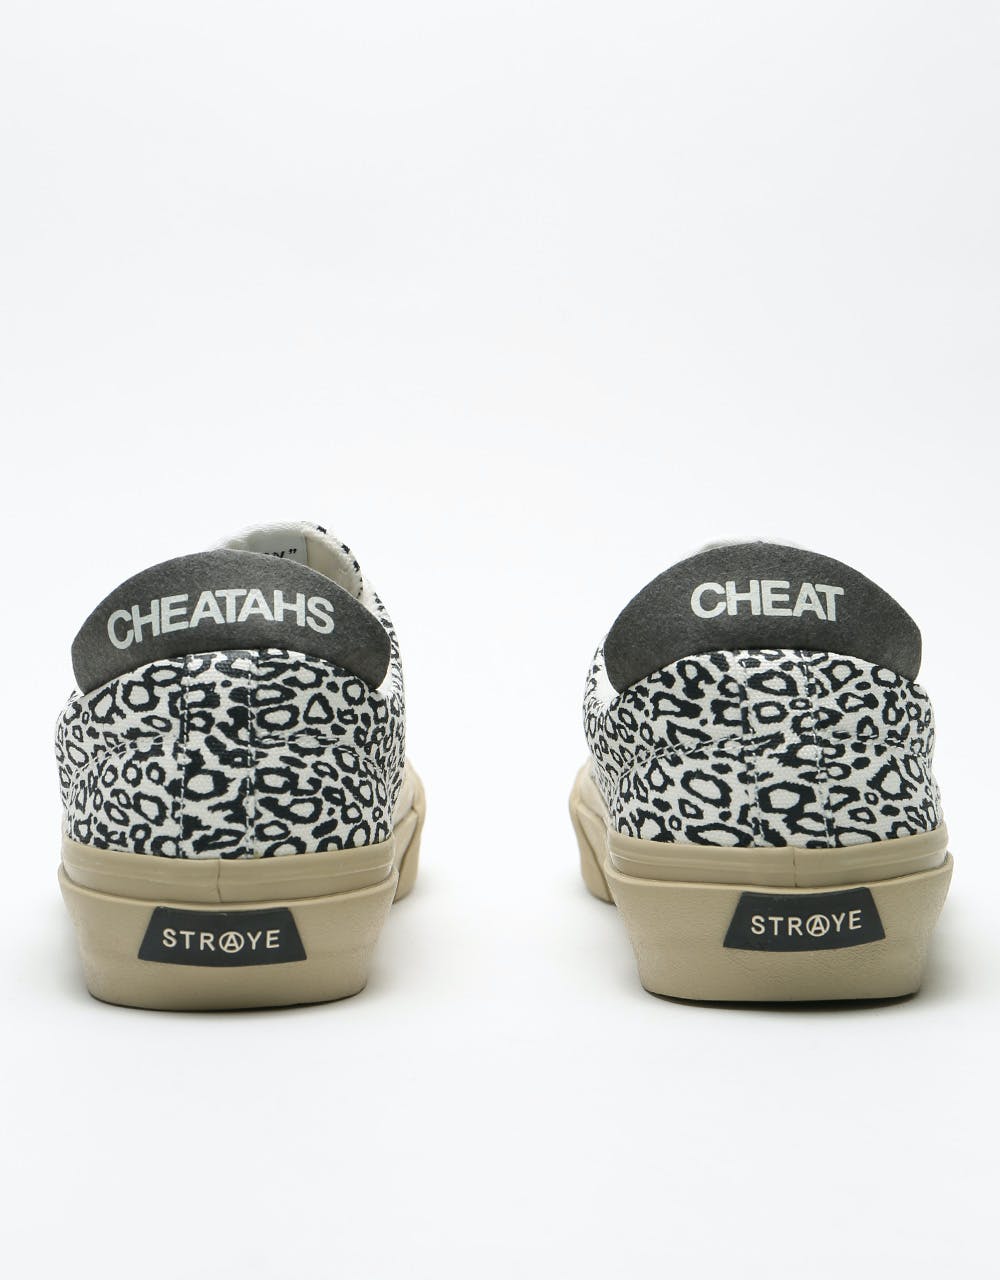 Straye Stanley Skate Shoes - Cheetah White